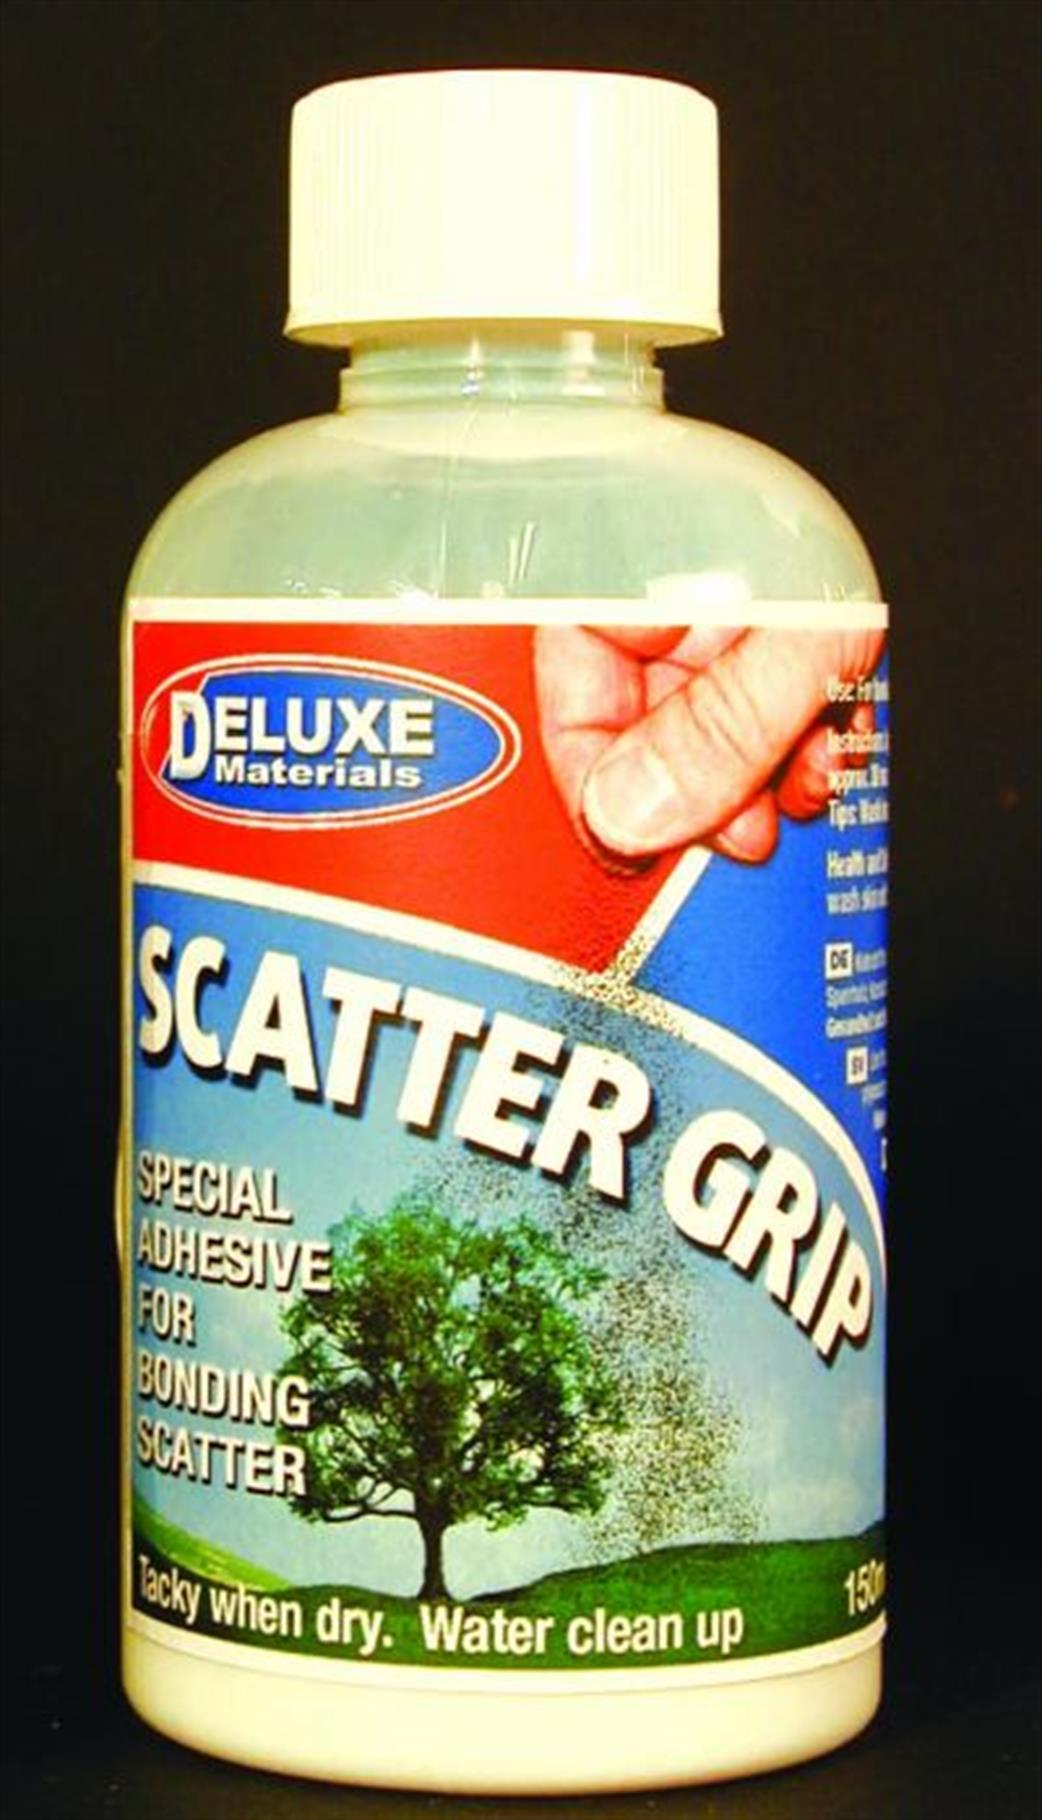 Deluxe Materials AD25 Scatter Grip 150ml Bottle